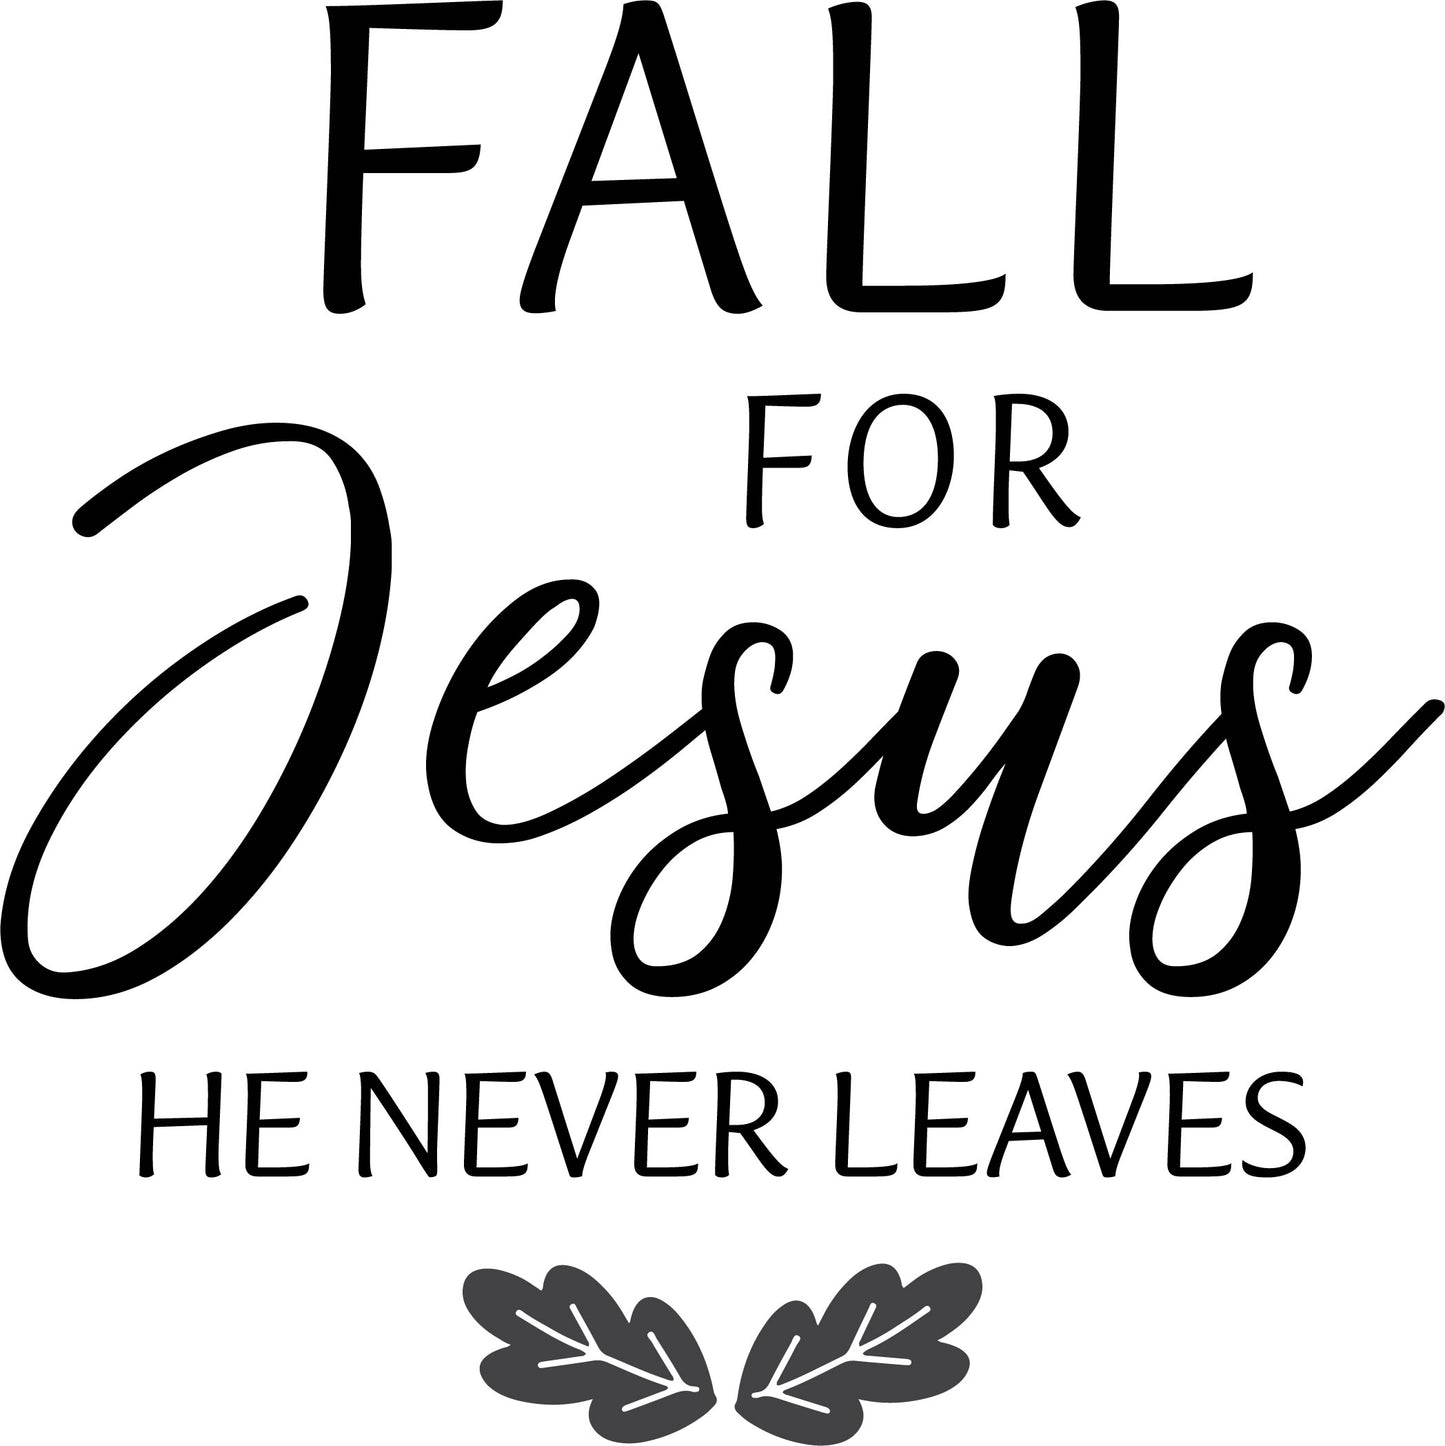 Fall For Jesus He Never Leaves- FLEECE CREW NECK SWEATSHIRT/PANT SET